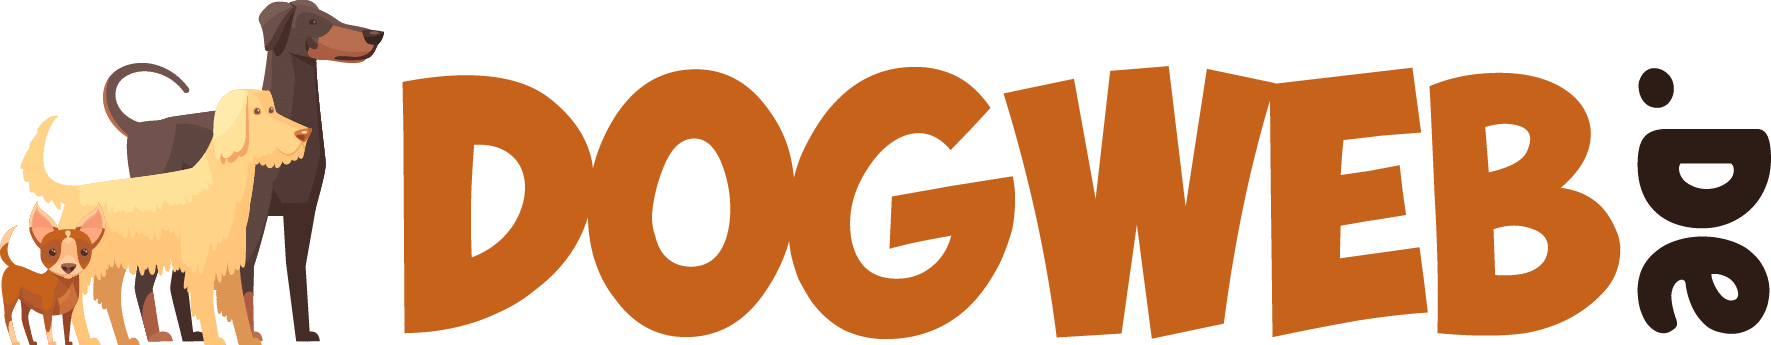 DogWeb.de - Hundeportal Logo